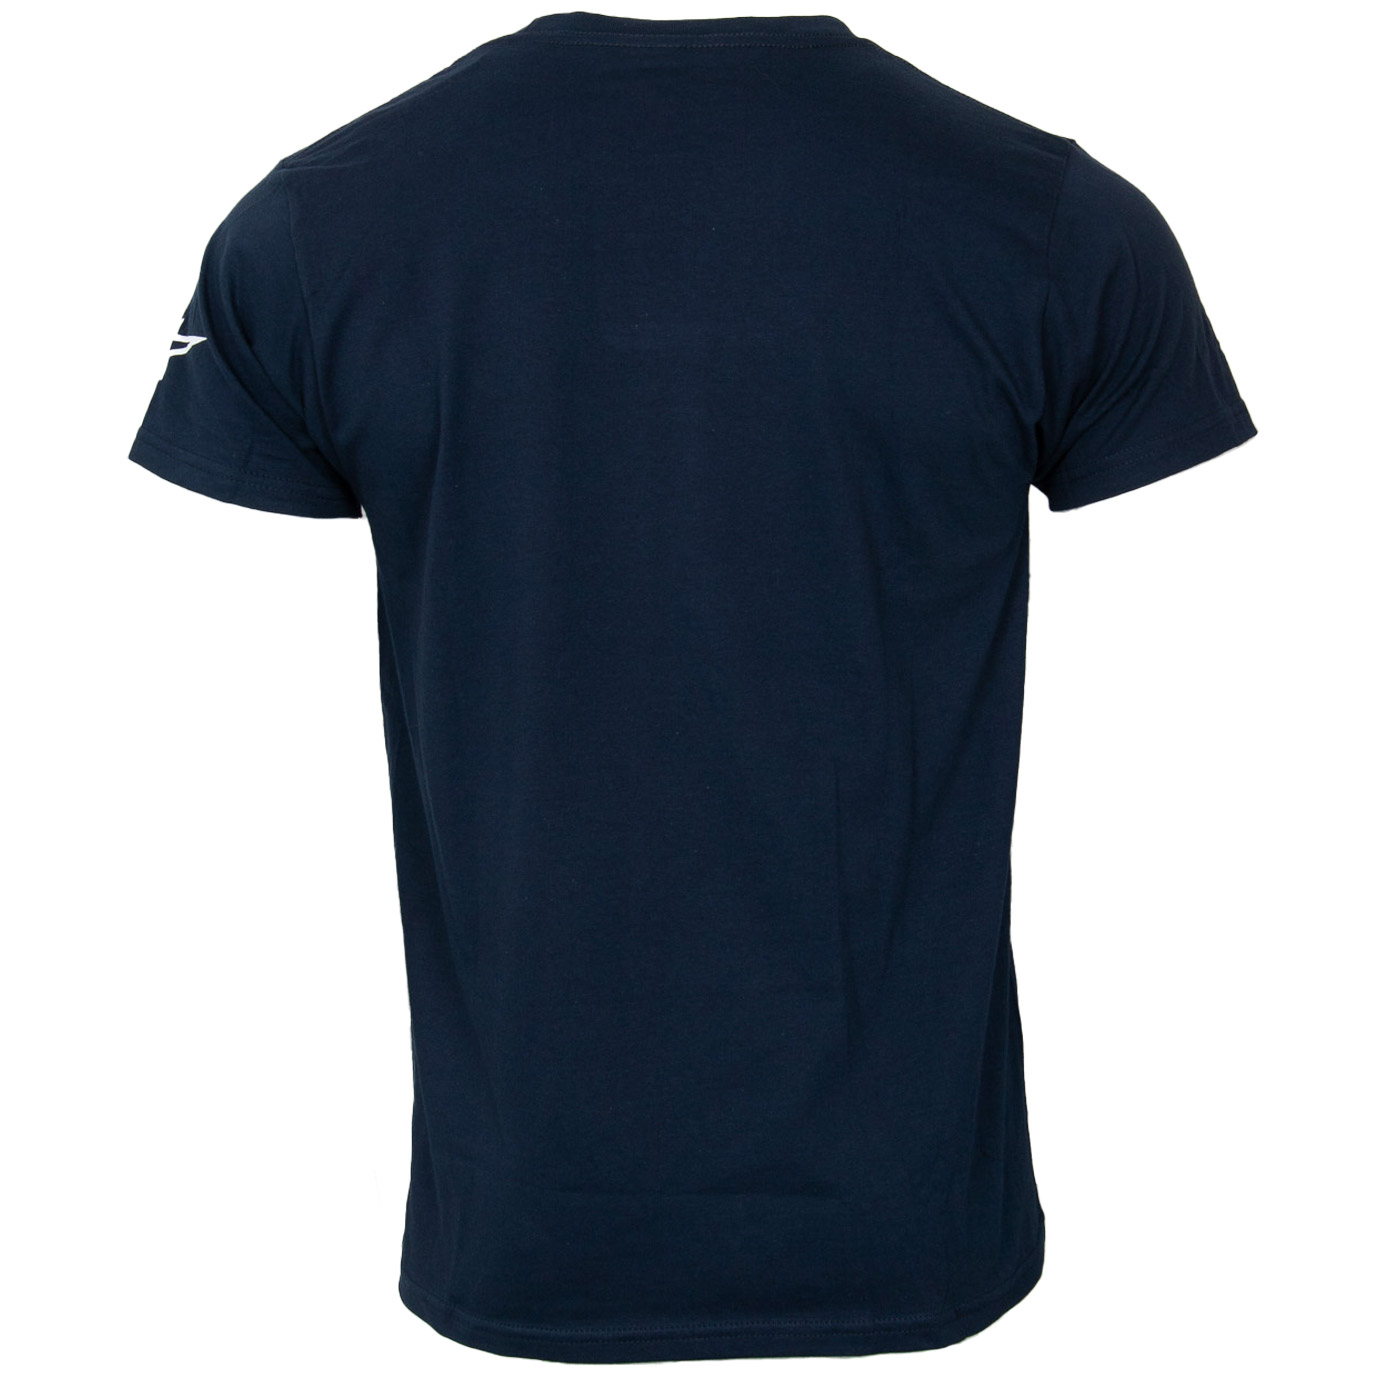 Alpinestars T-Shirt "Los Angeles" - blau